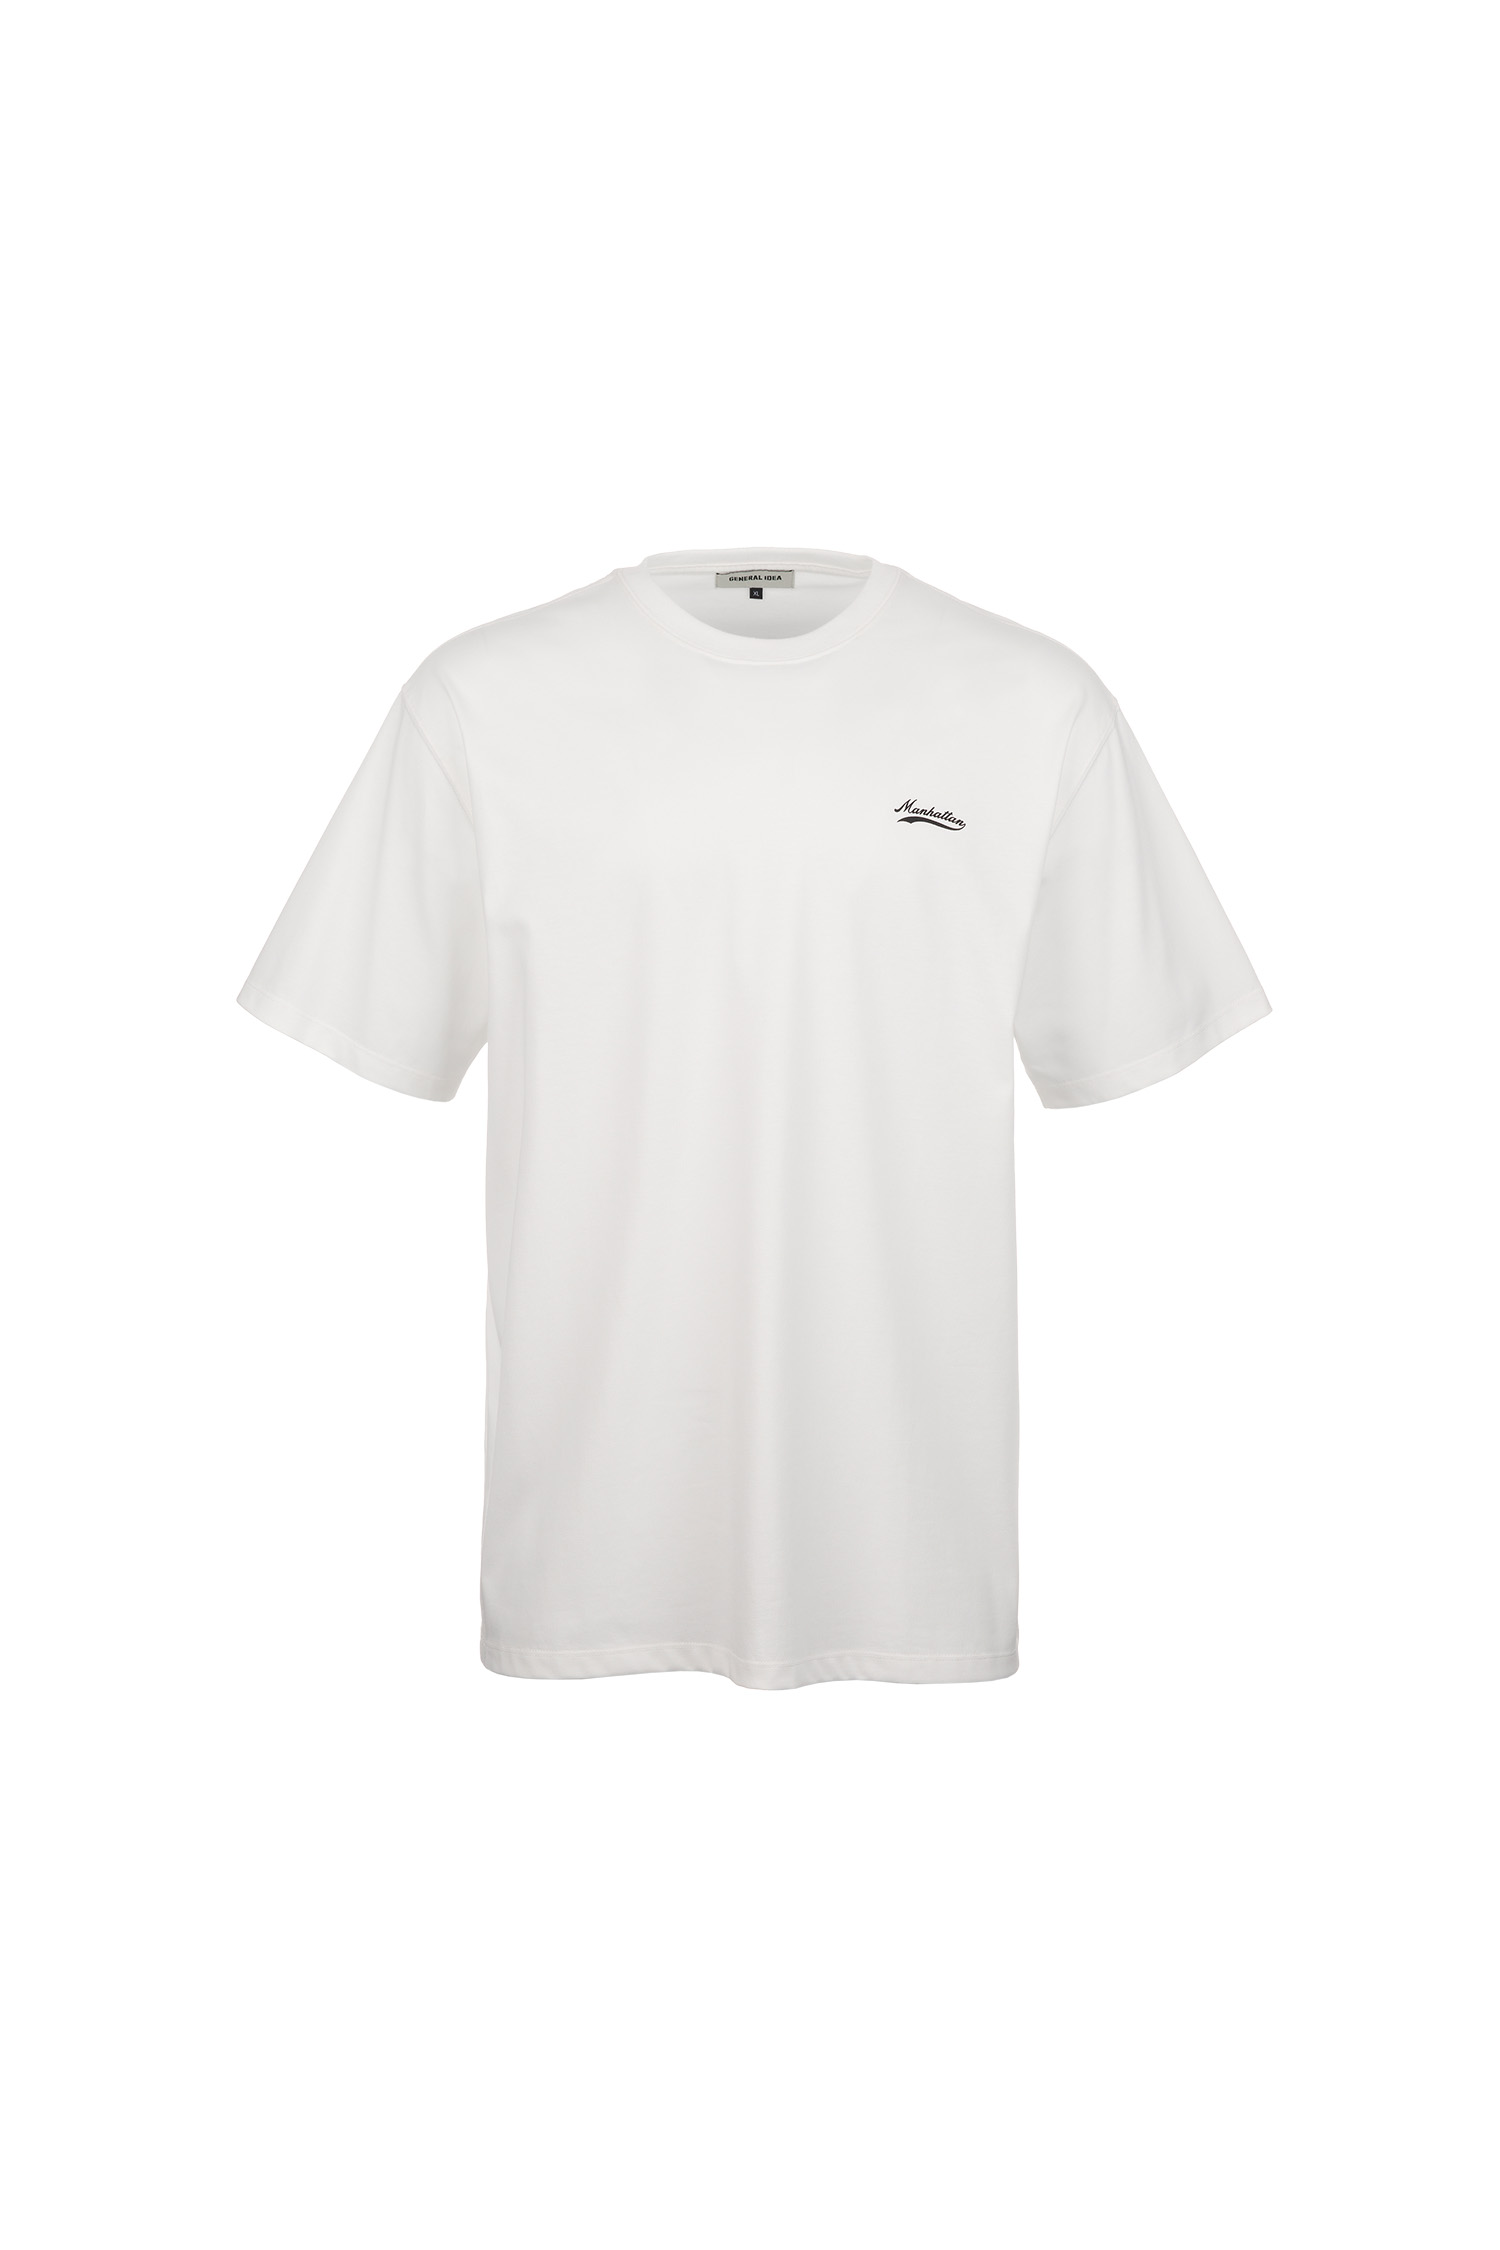 UNISEX 맨하탄 반팔 티셔츠 [WHITE]